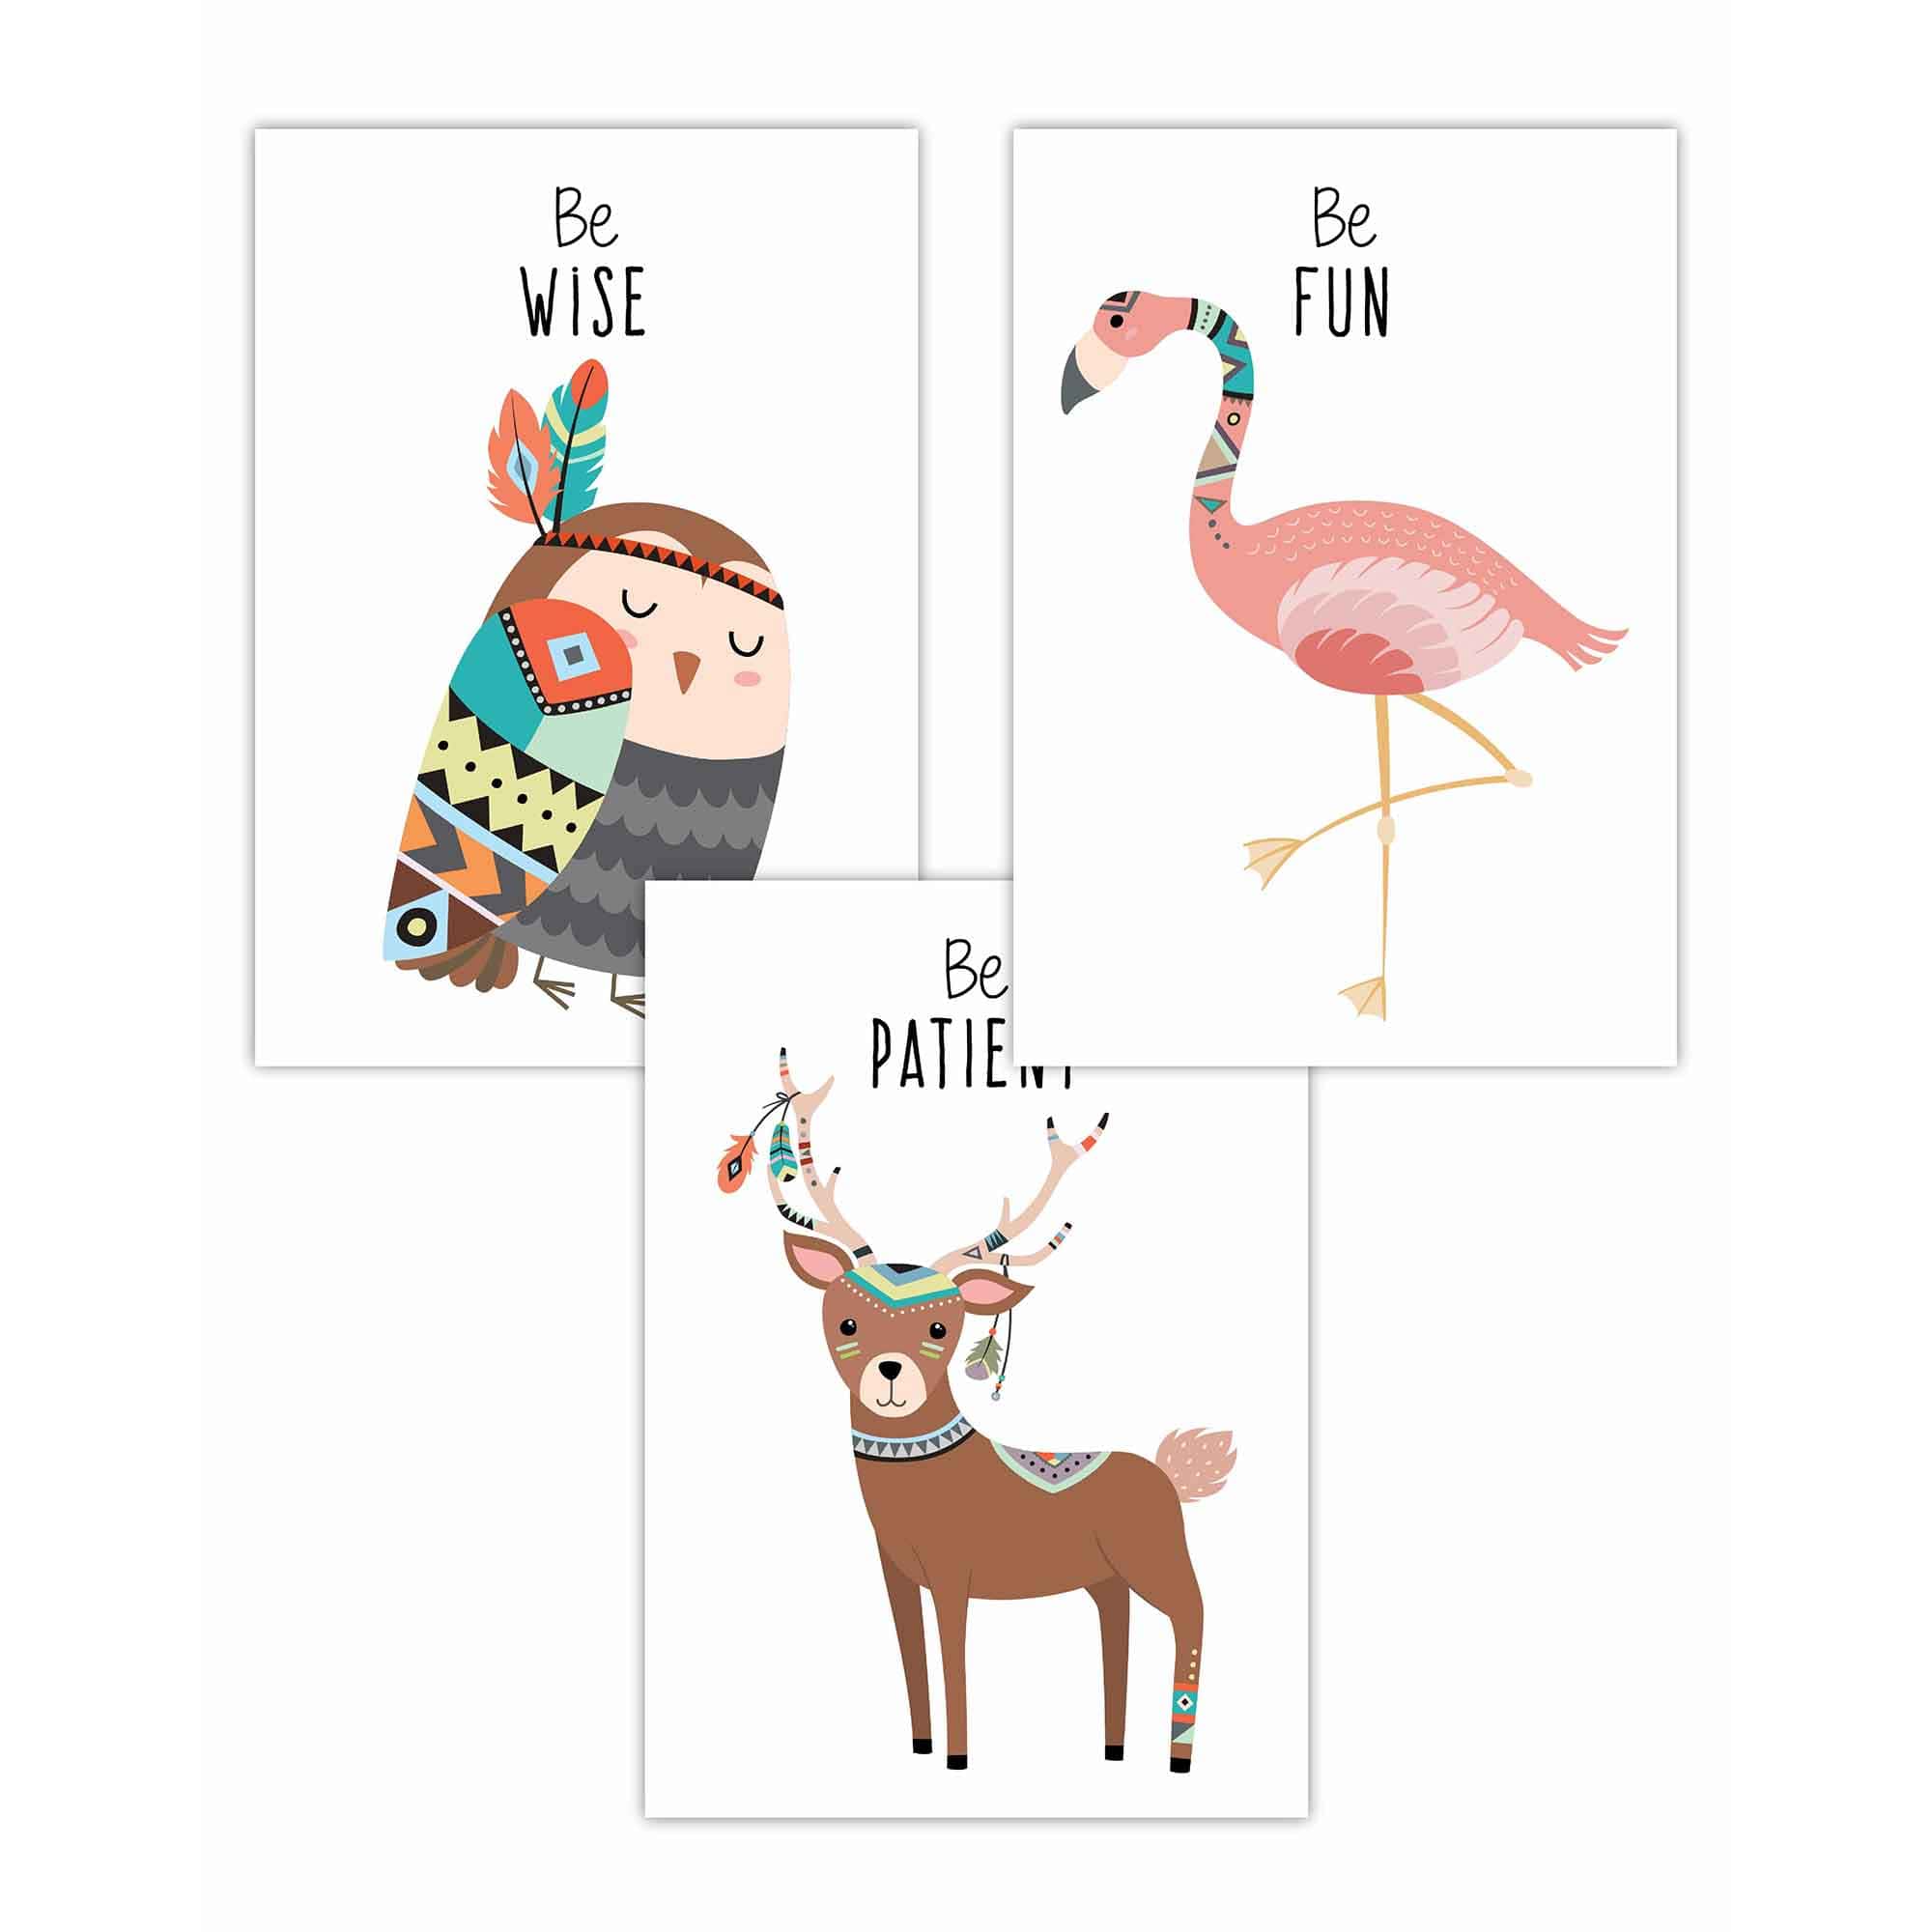 NURSERY Set of 3 Tribal Owl, Deer, Flamingo Wall Art Quote Prints